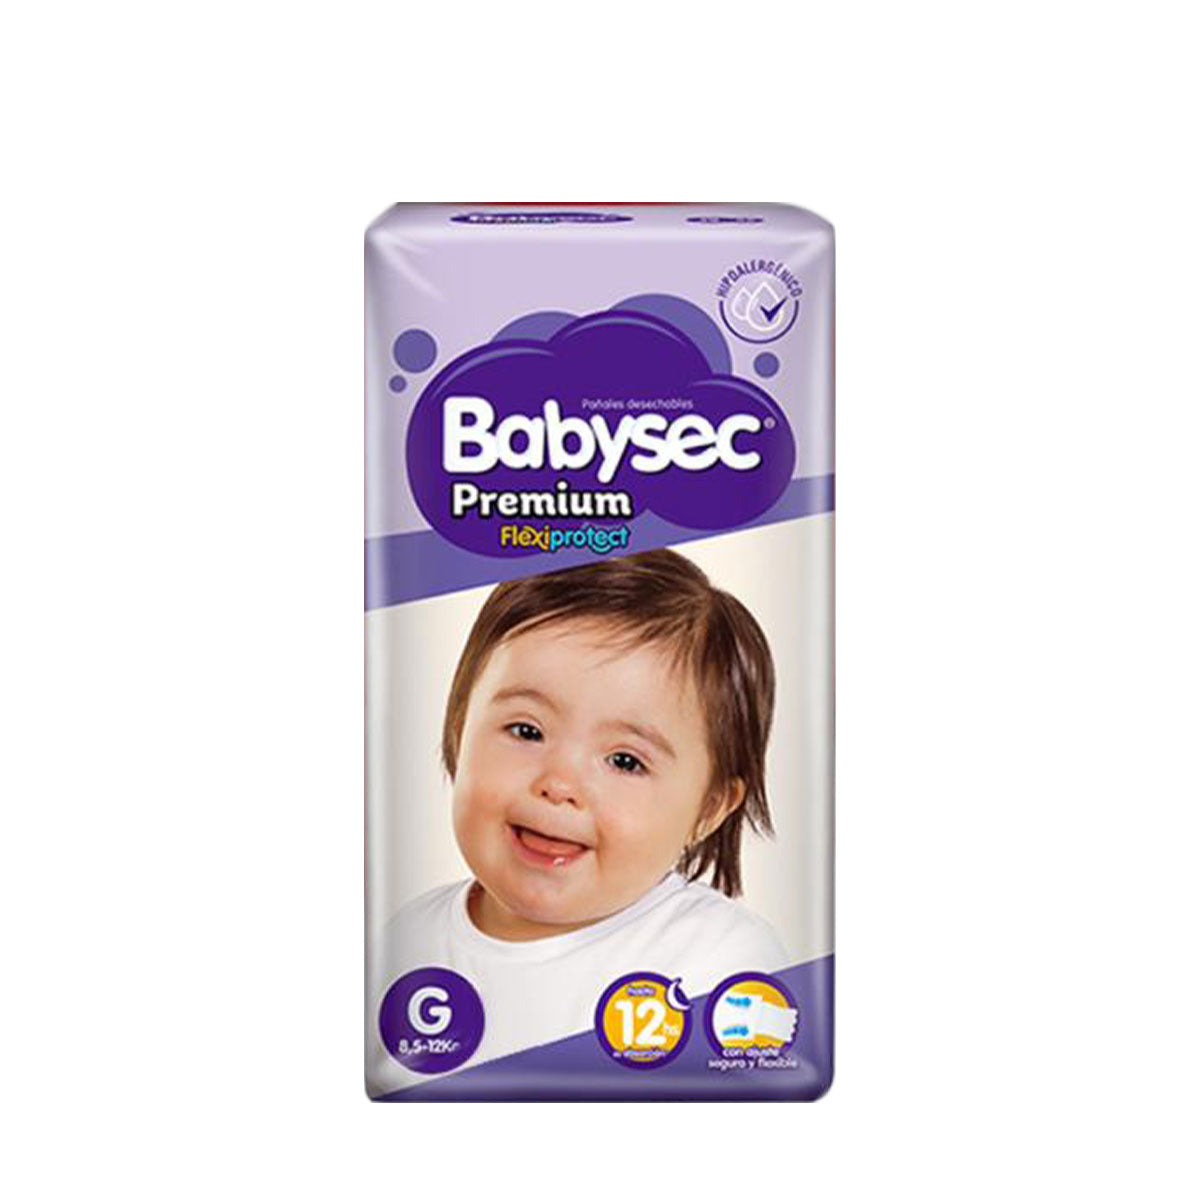 Pañales Babysec Premium G (144 unidades)